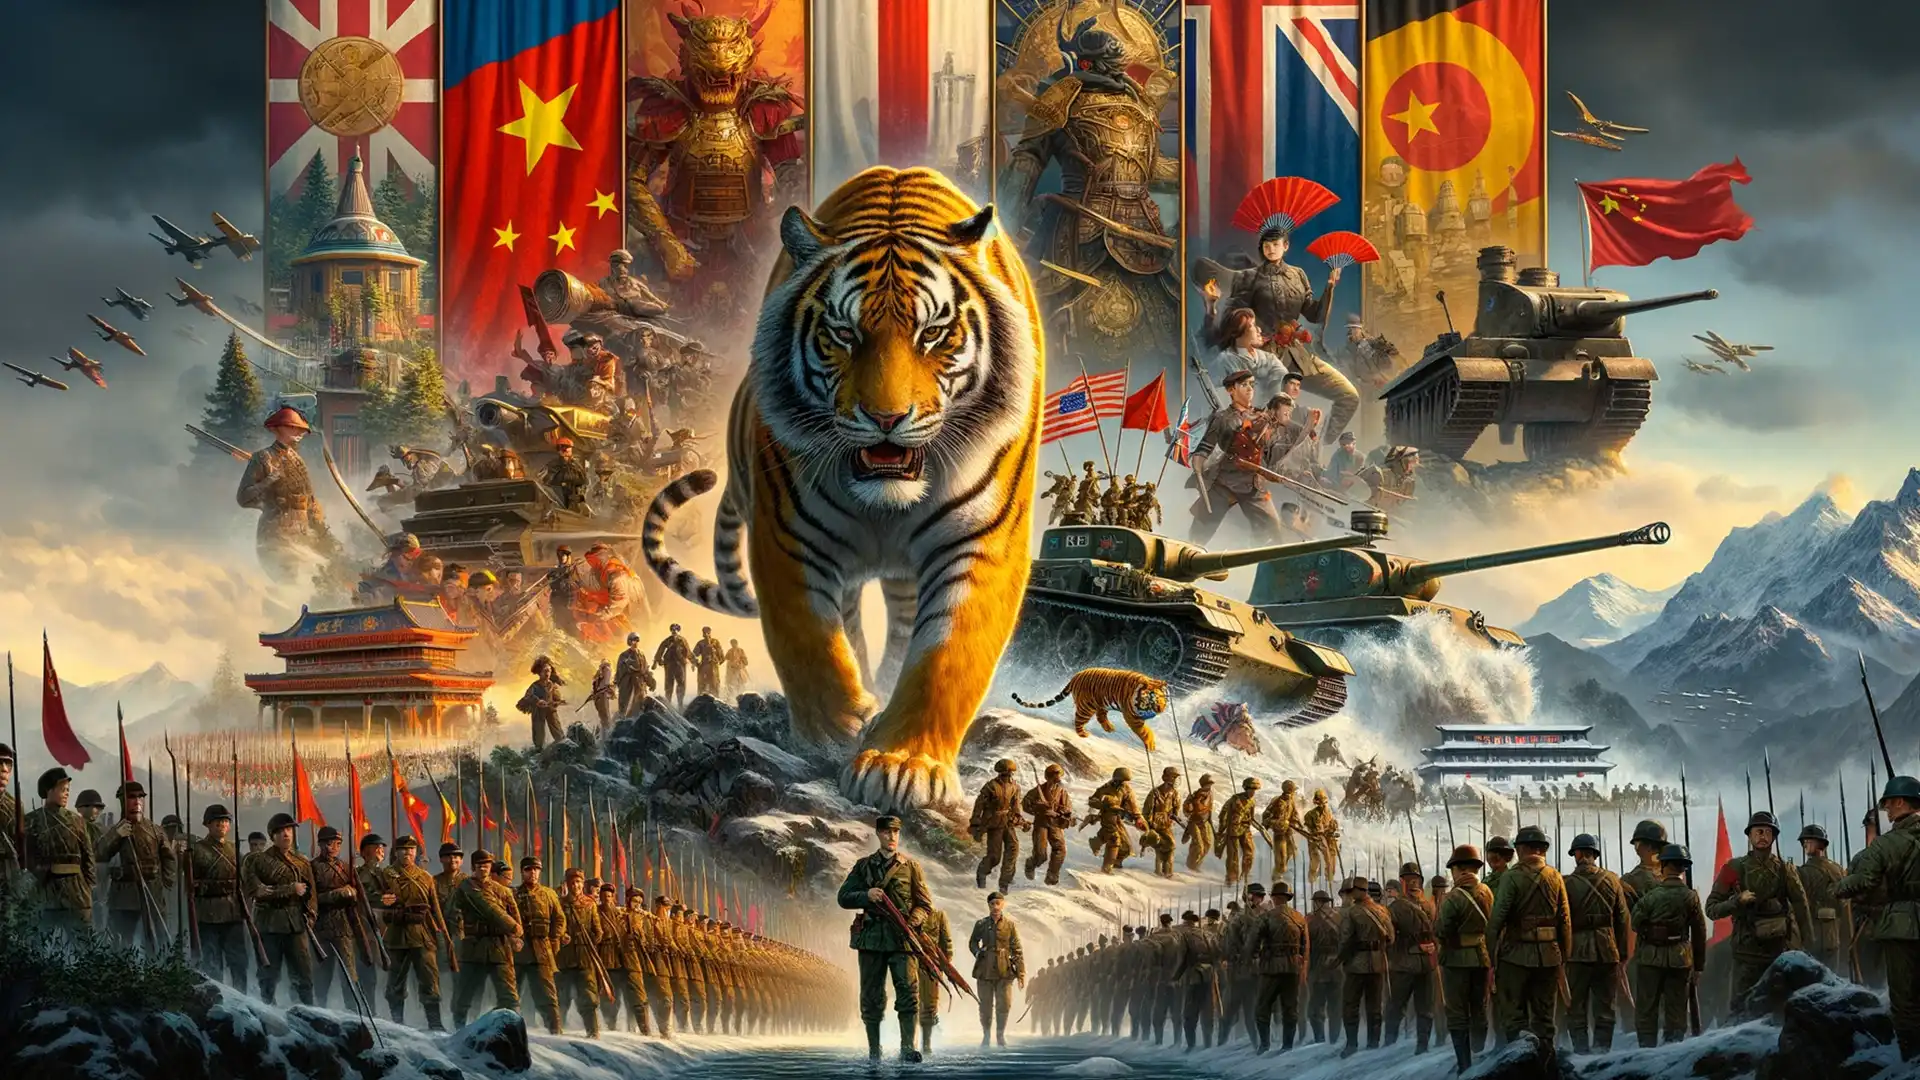 Войска маршируют перед тигром на фоне флагов в Hearts of Iron IV